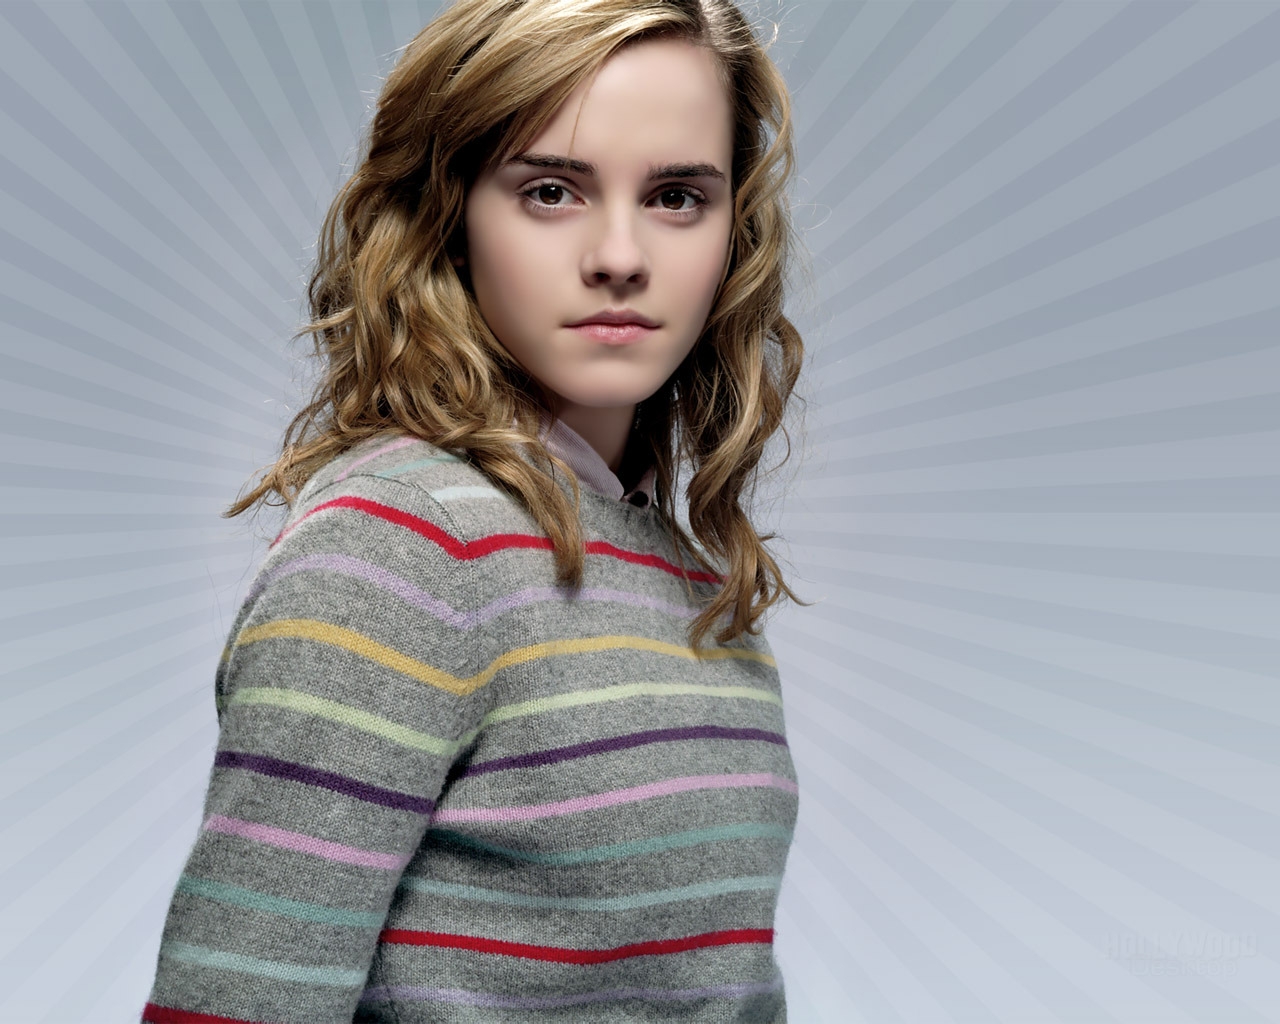 Beautiful Emma Watson for 1280 x 1024 resolution